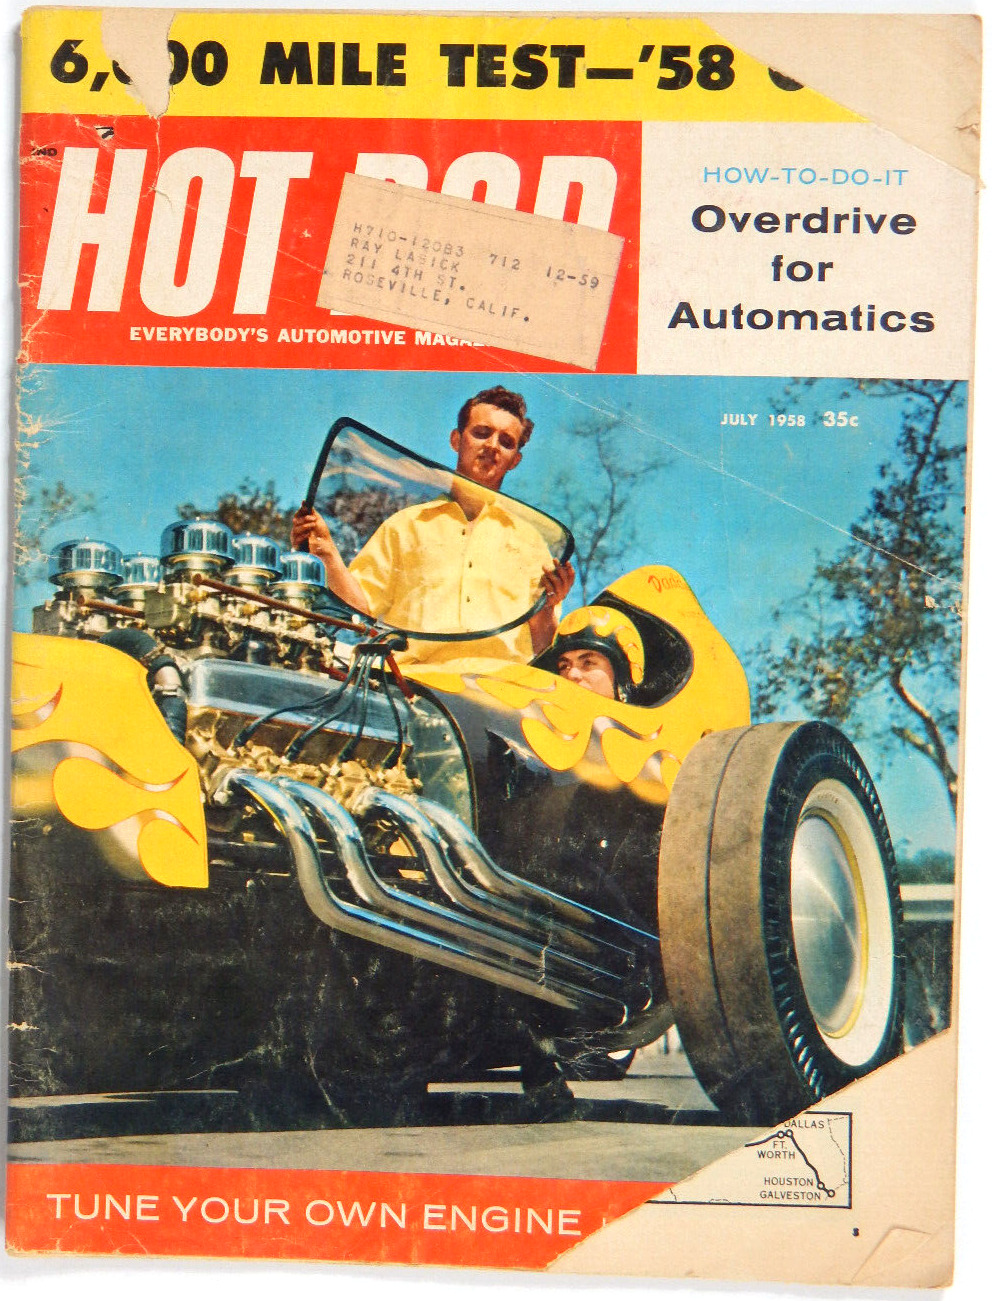 VTG HOT ROD AUTOMOTIVE MAGAZINE JULY 1958 OVERDRIVE FOR AUTOMATICS TUNING